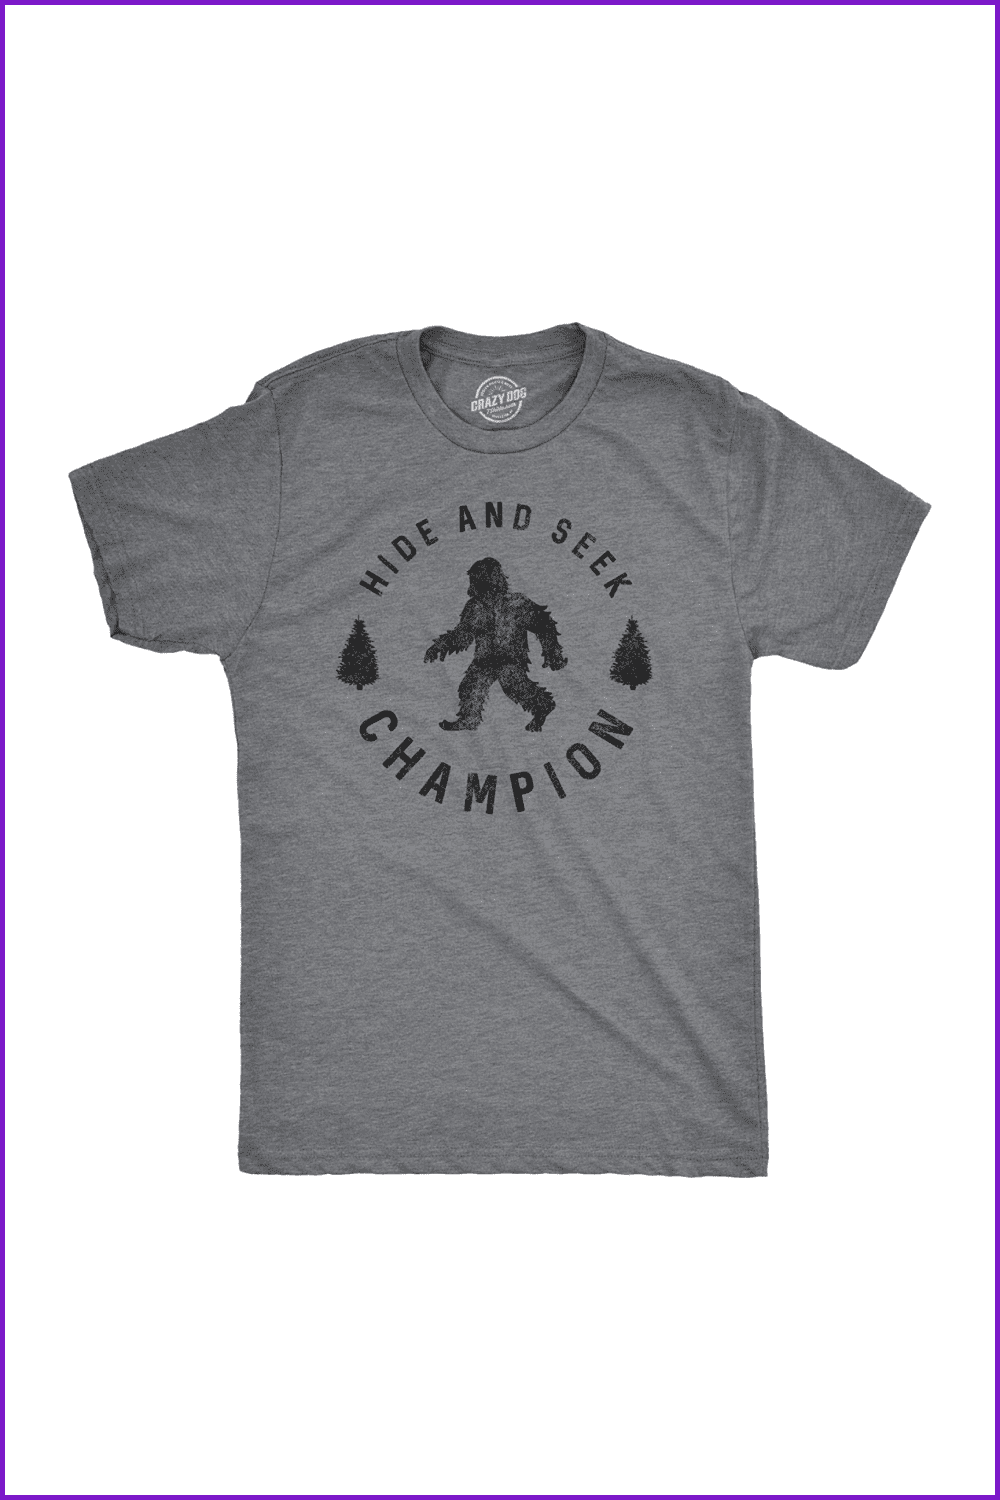 Mens Hide and Seek Champion T Shirt Funny Bigfoot Tee Humor Cool Graphic Print.